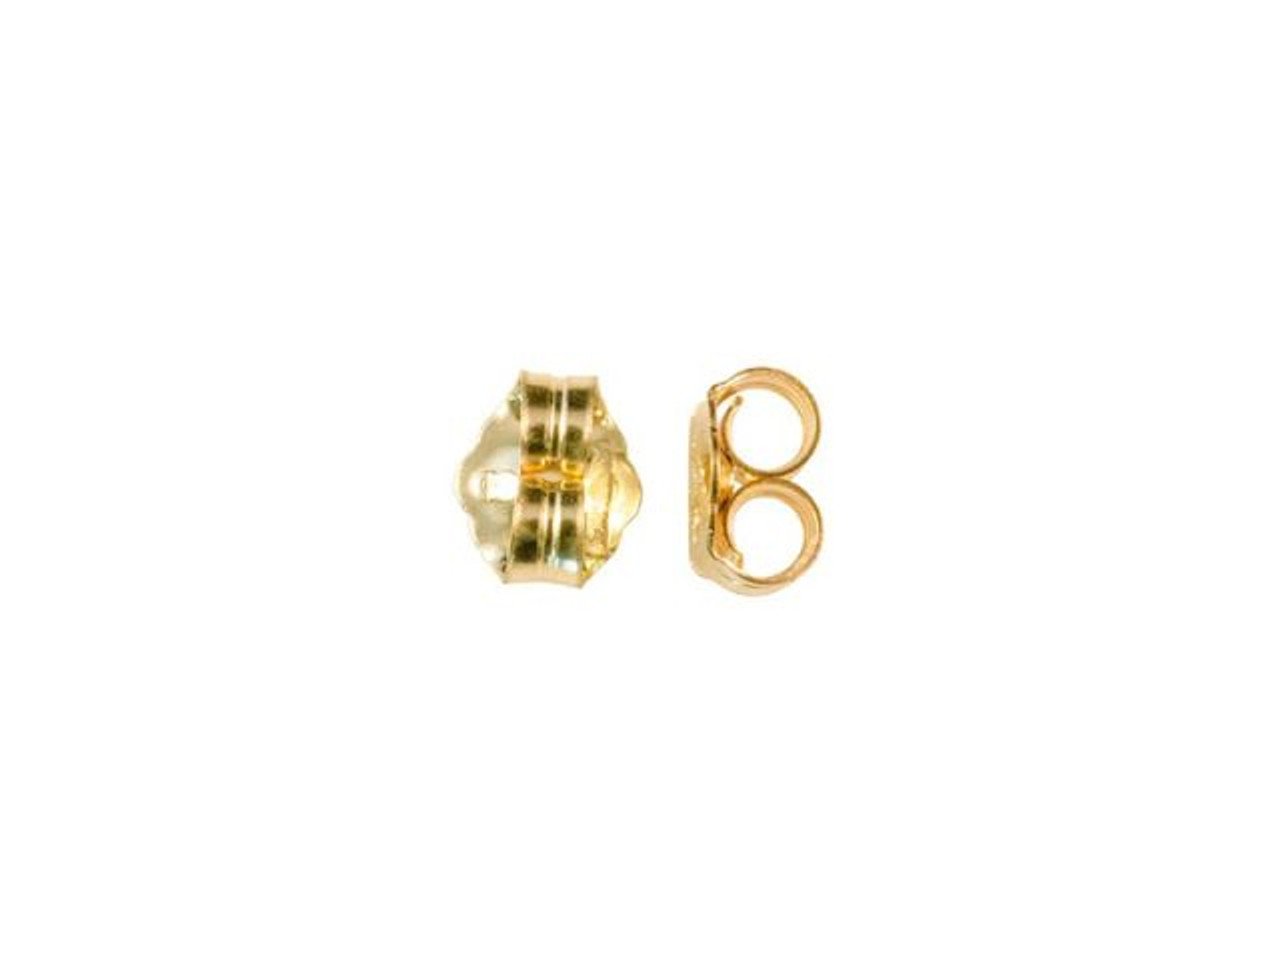 33-614 Gold-Filled Earring Backs, Butterfly Nut - Rings & Things